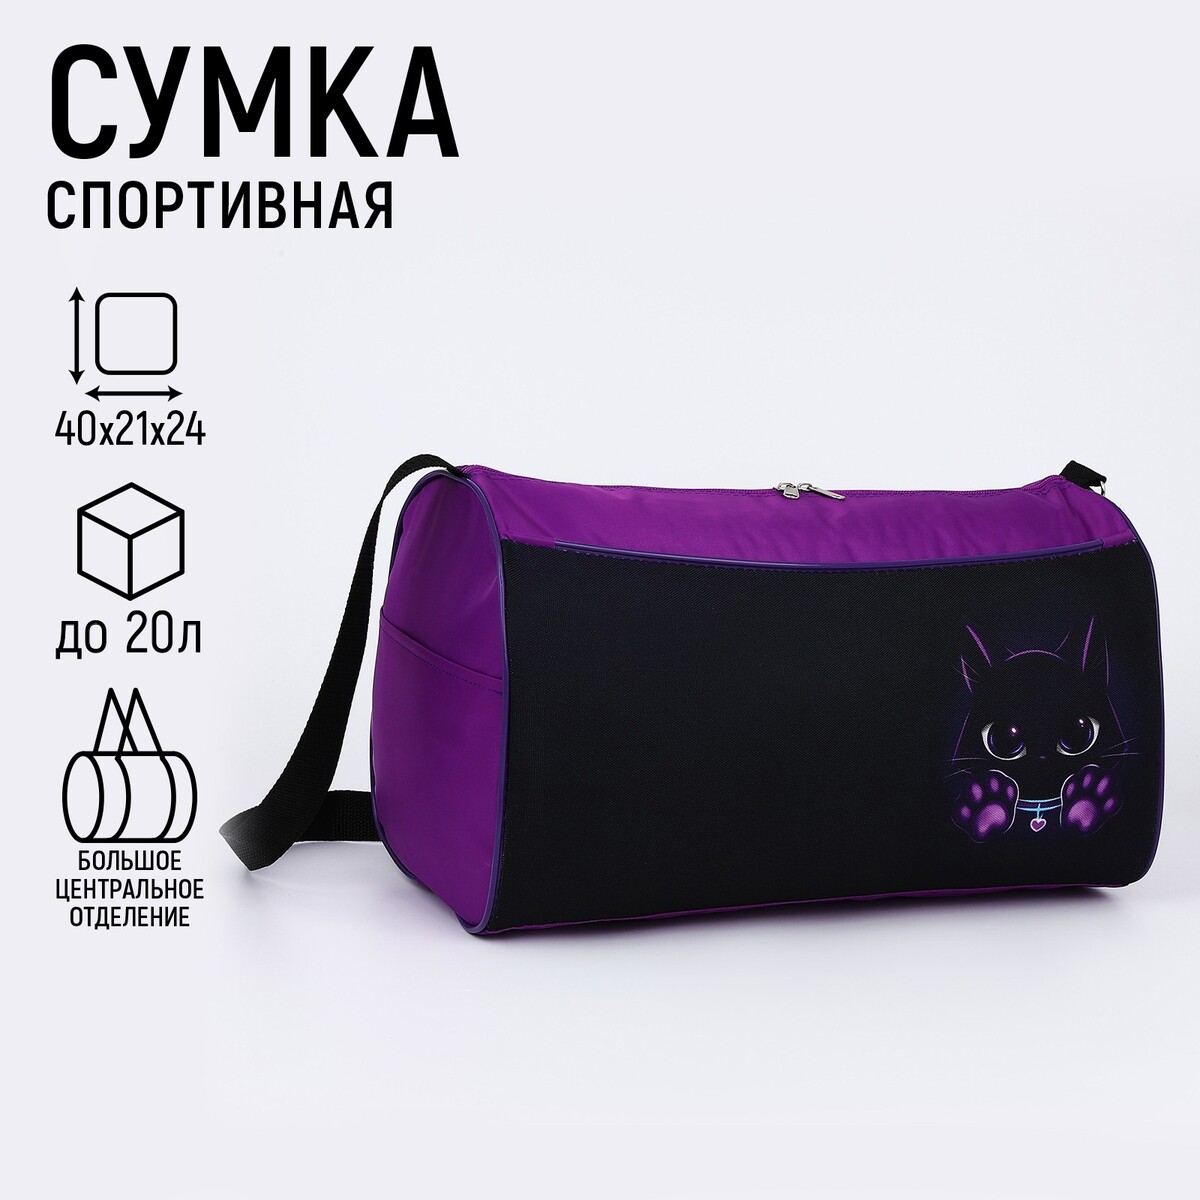 Сумка спортивная котик, 40х21х24см, цвет черный, фиолетовый сумка спортивная котик 40х21х24см фиолетовый